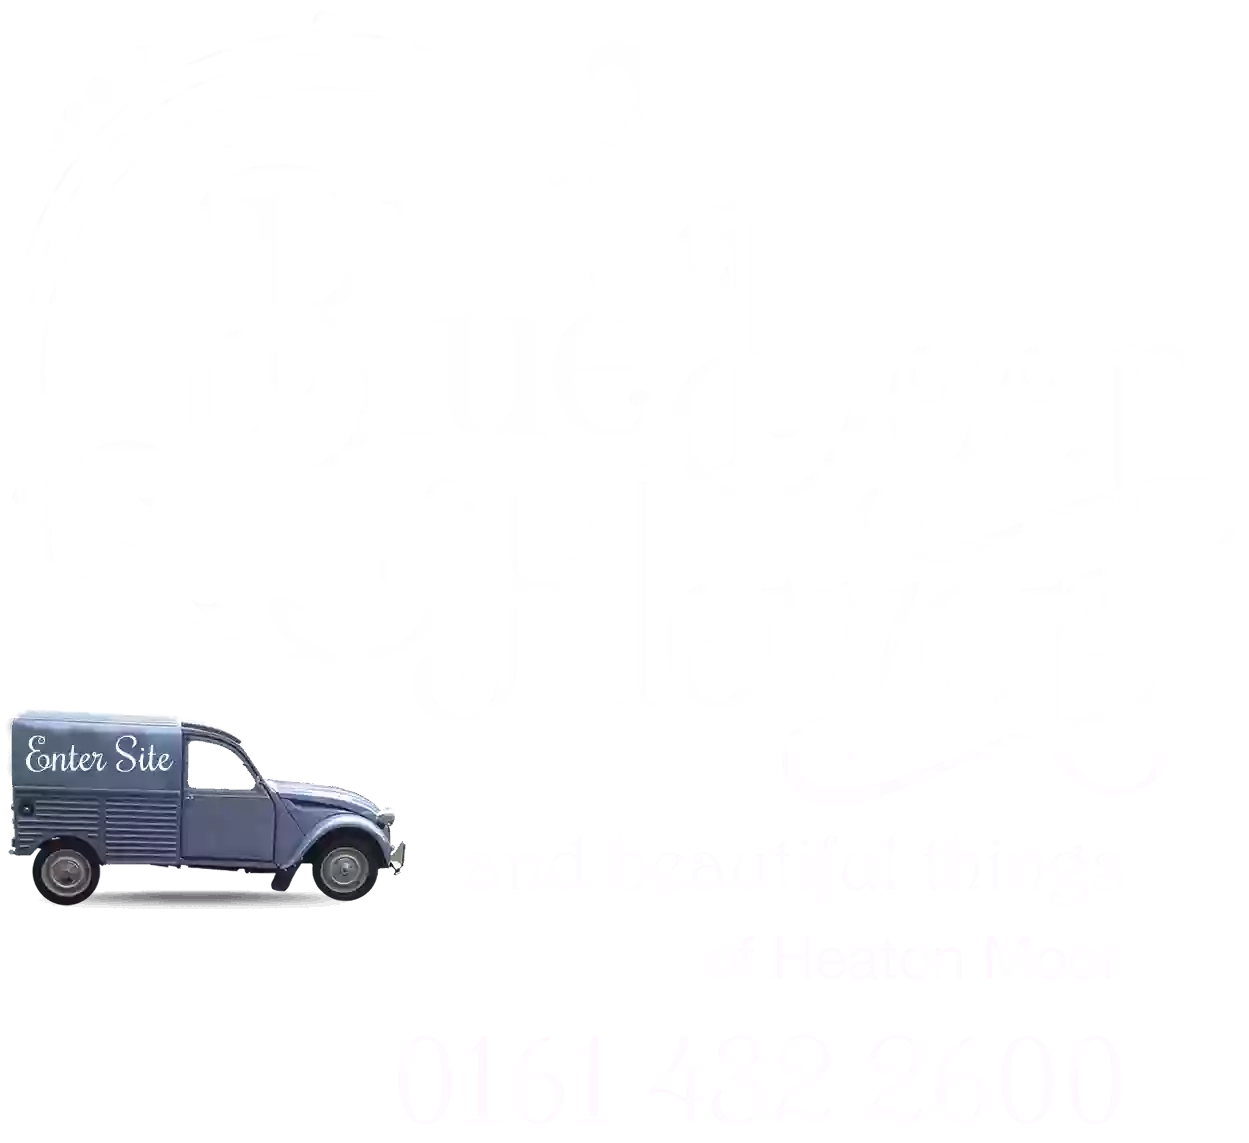 Blue Door Flowers and beautiful things